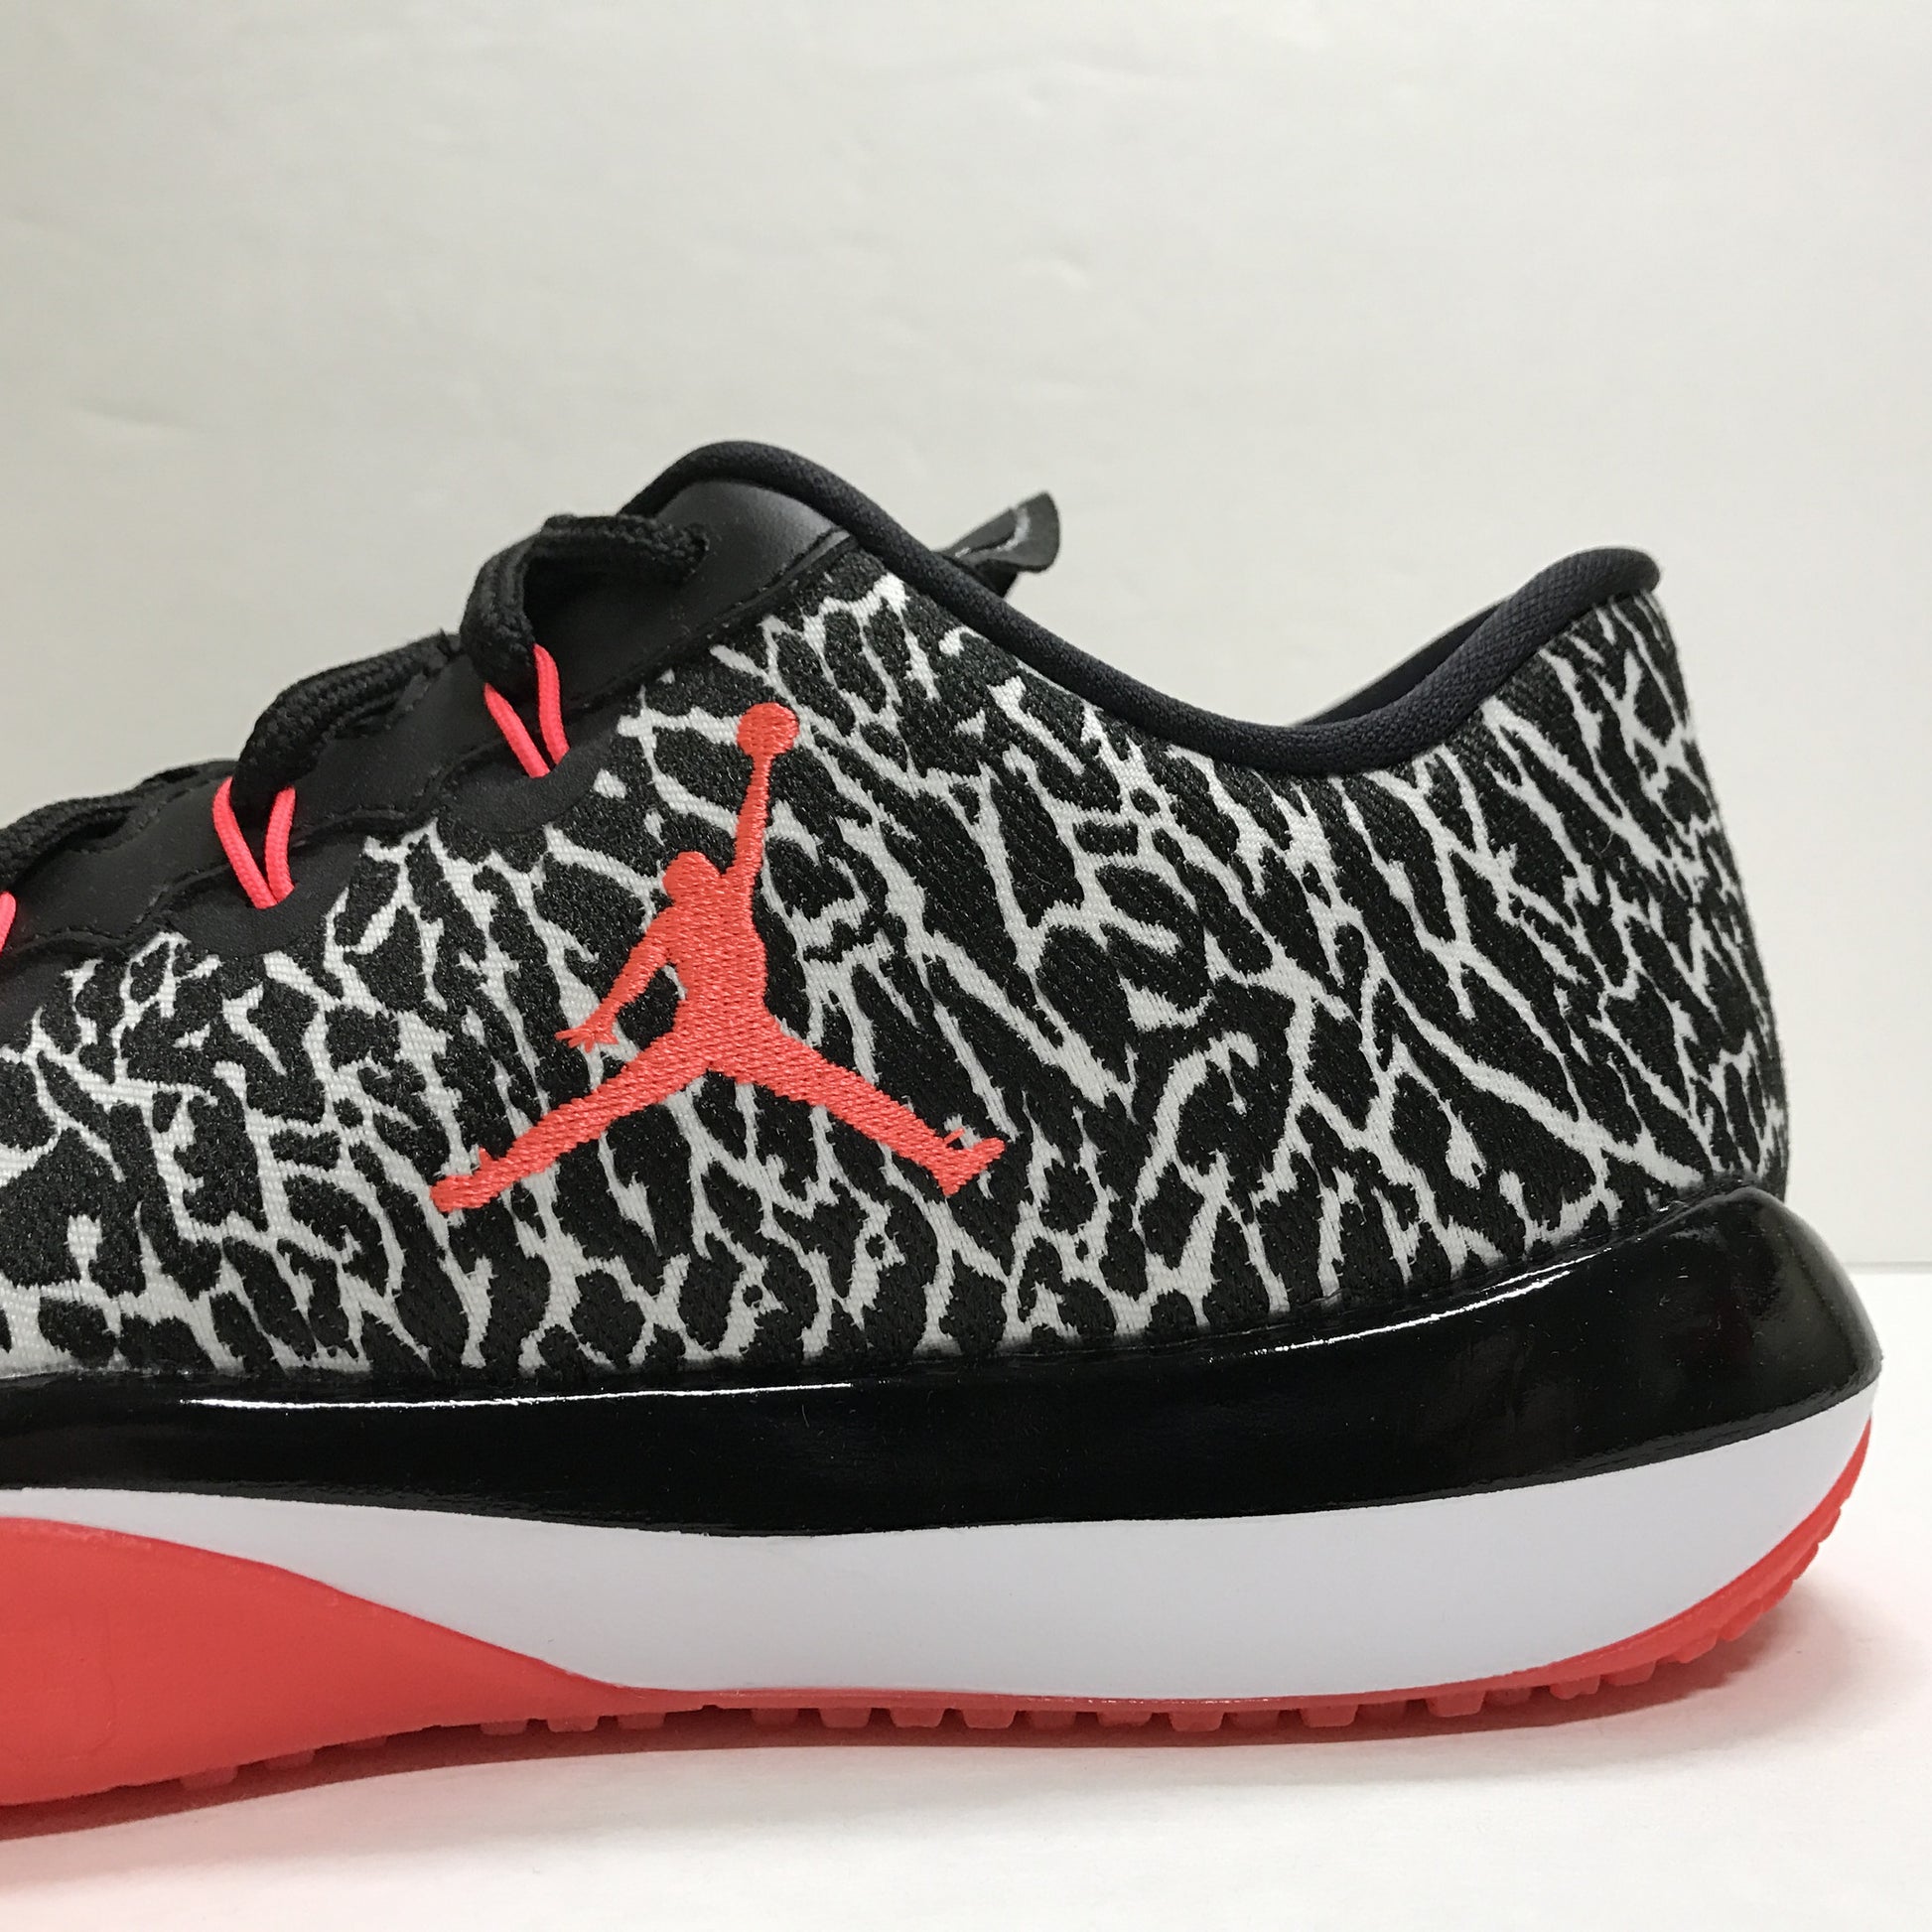 DS Nike Air Jordan Trainer 1 Black Elephant Print/Infrared  Low BG Size 7Y - DOPEFOOT
 - 6